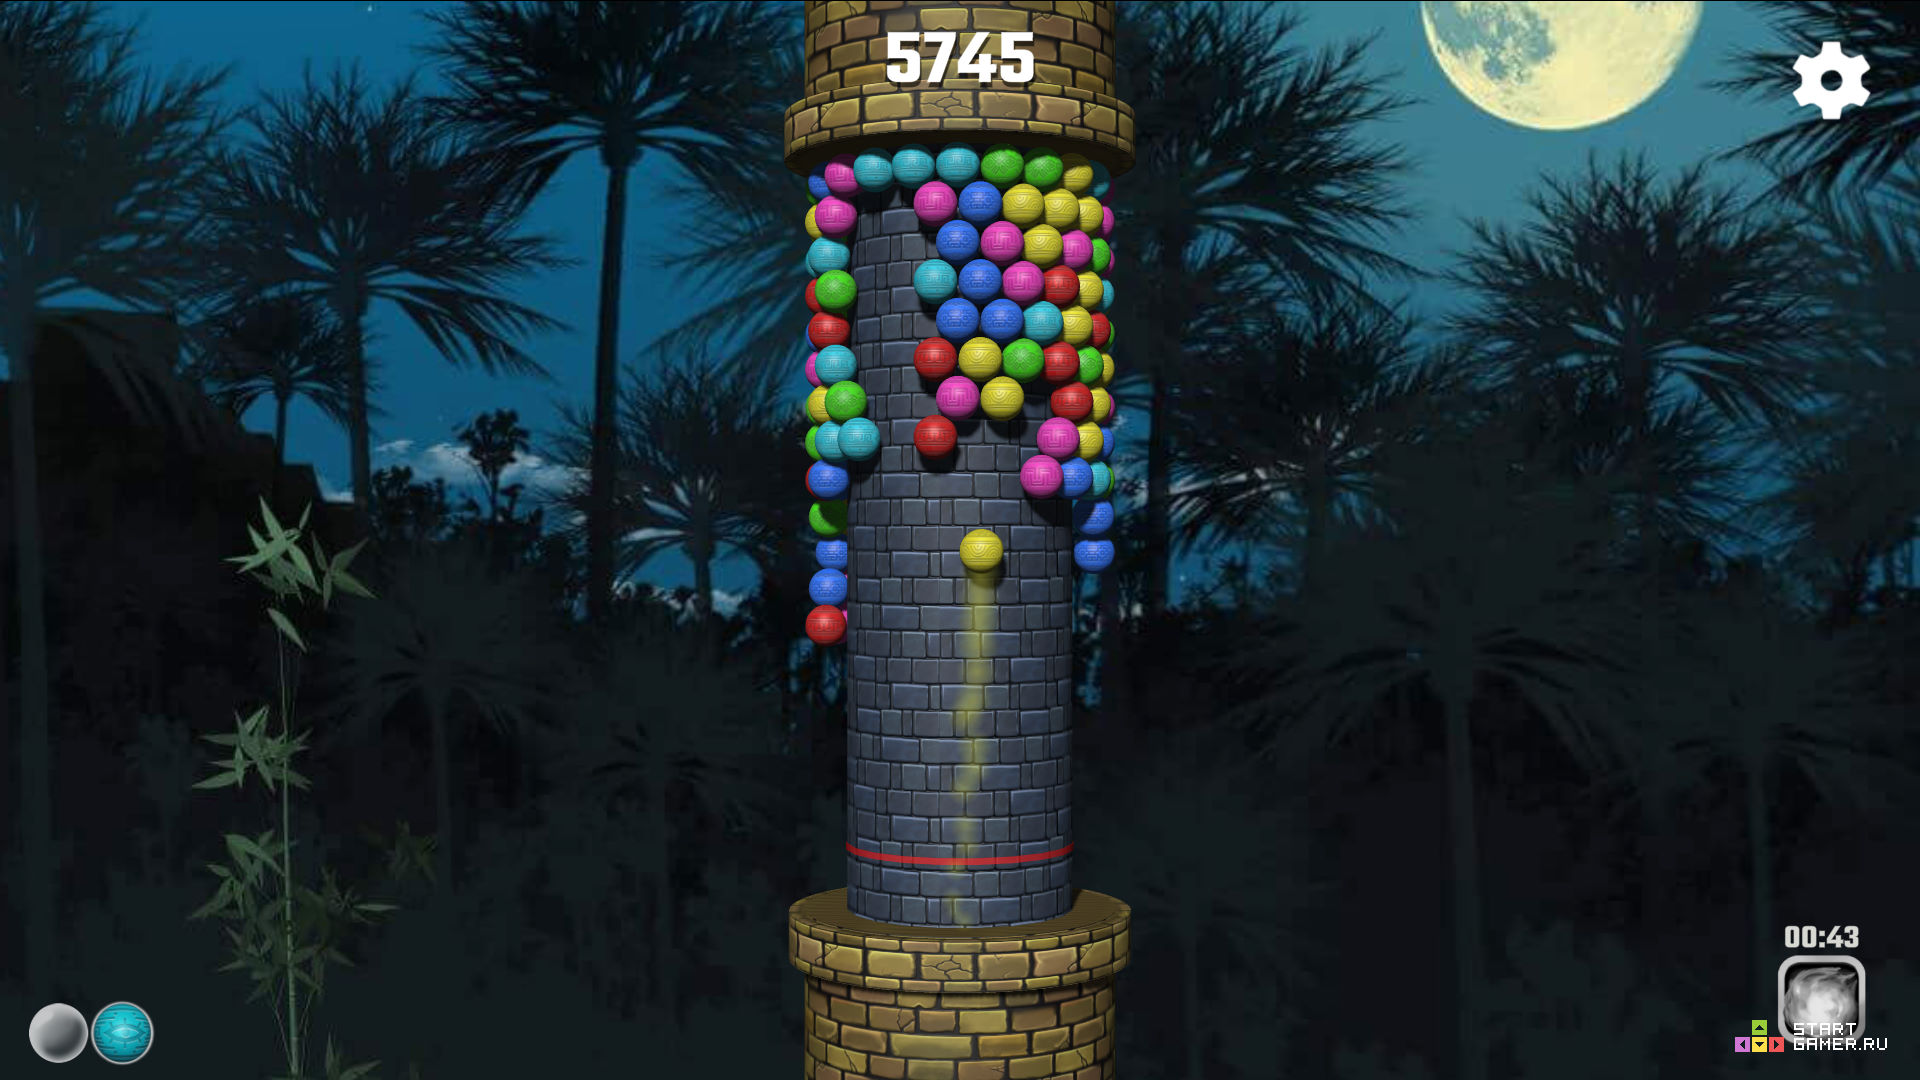 Башня 3 д играть. Башня шариков игра. Игра шарики на башне. Игра 3д башня шариковая. Игра в башню из шариков.